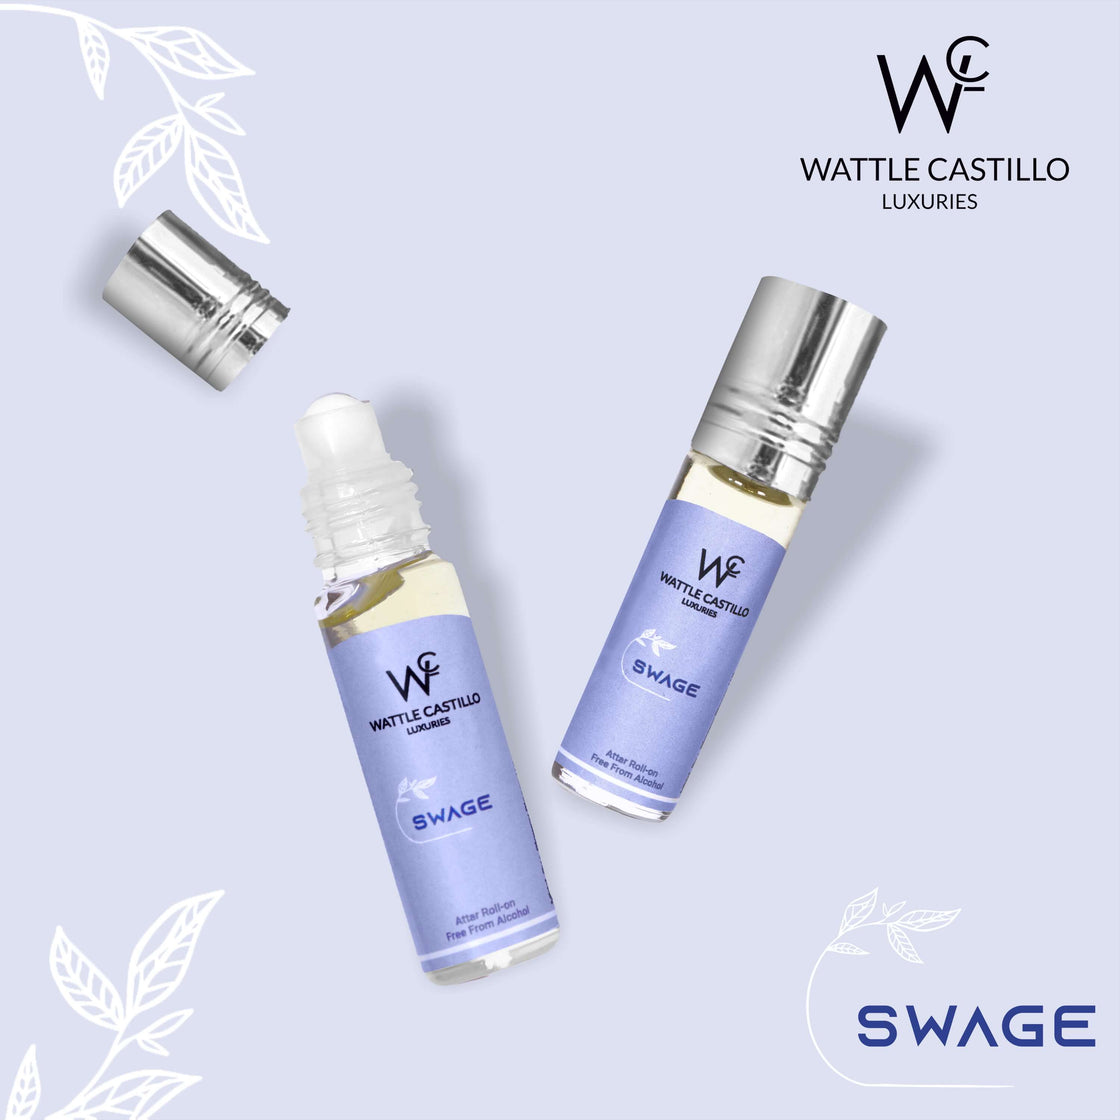 Wattle Castillo Fantasia And Swage Premium Luxury 100% Non Alcoholic Long Lasting Roll On Attar Combo Perfume For Unisex - Wattle Castillo